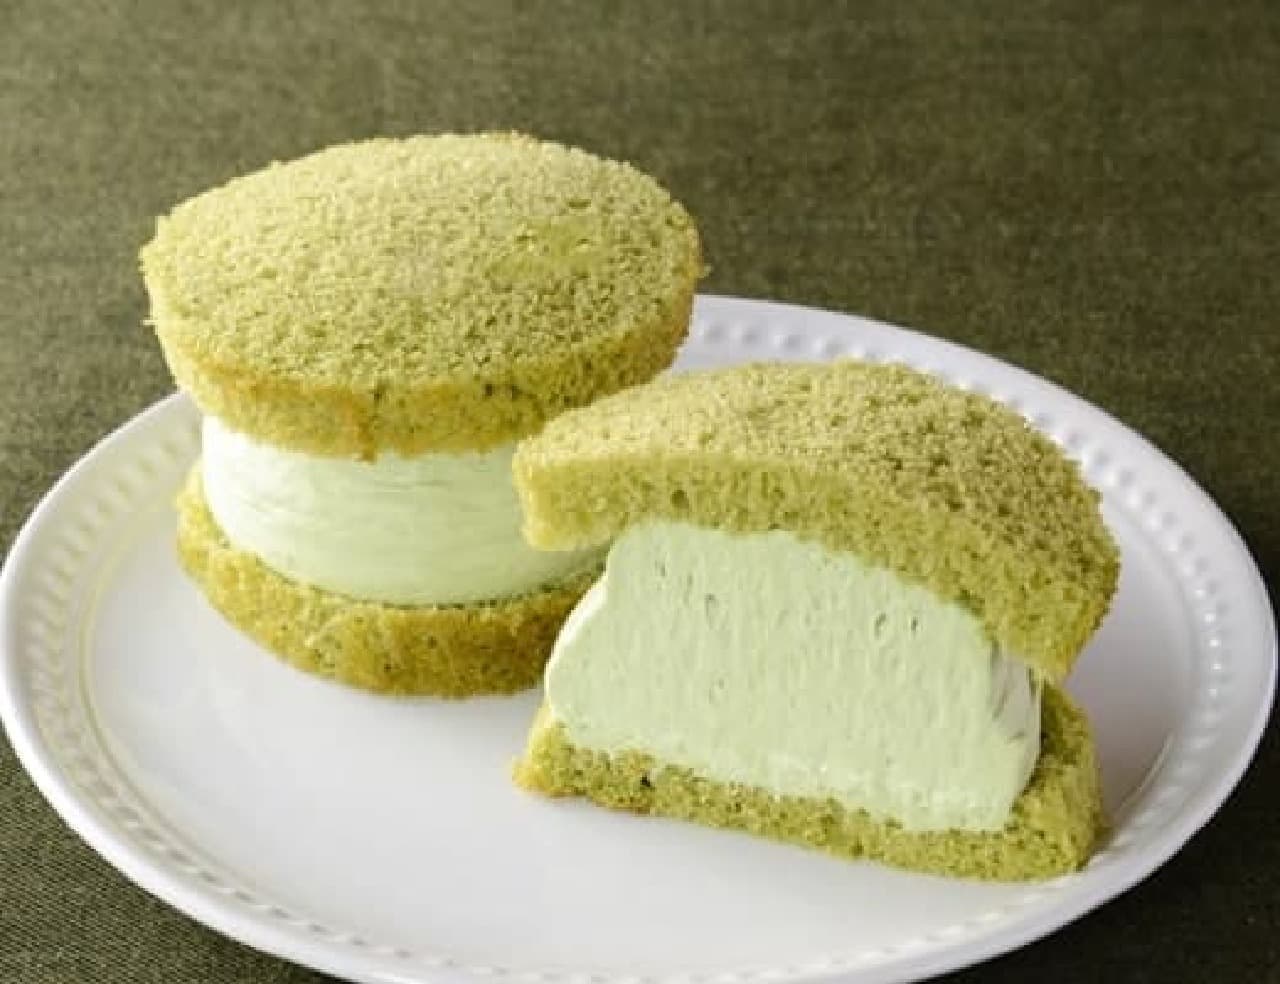 Lawson "Matcha Cream Sandwich with Protein